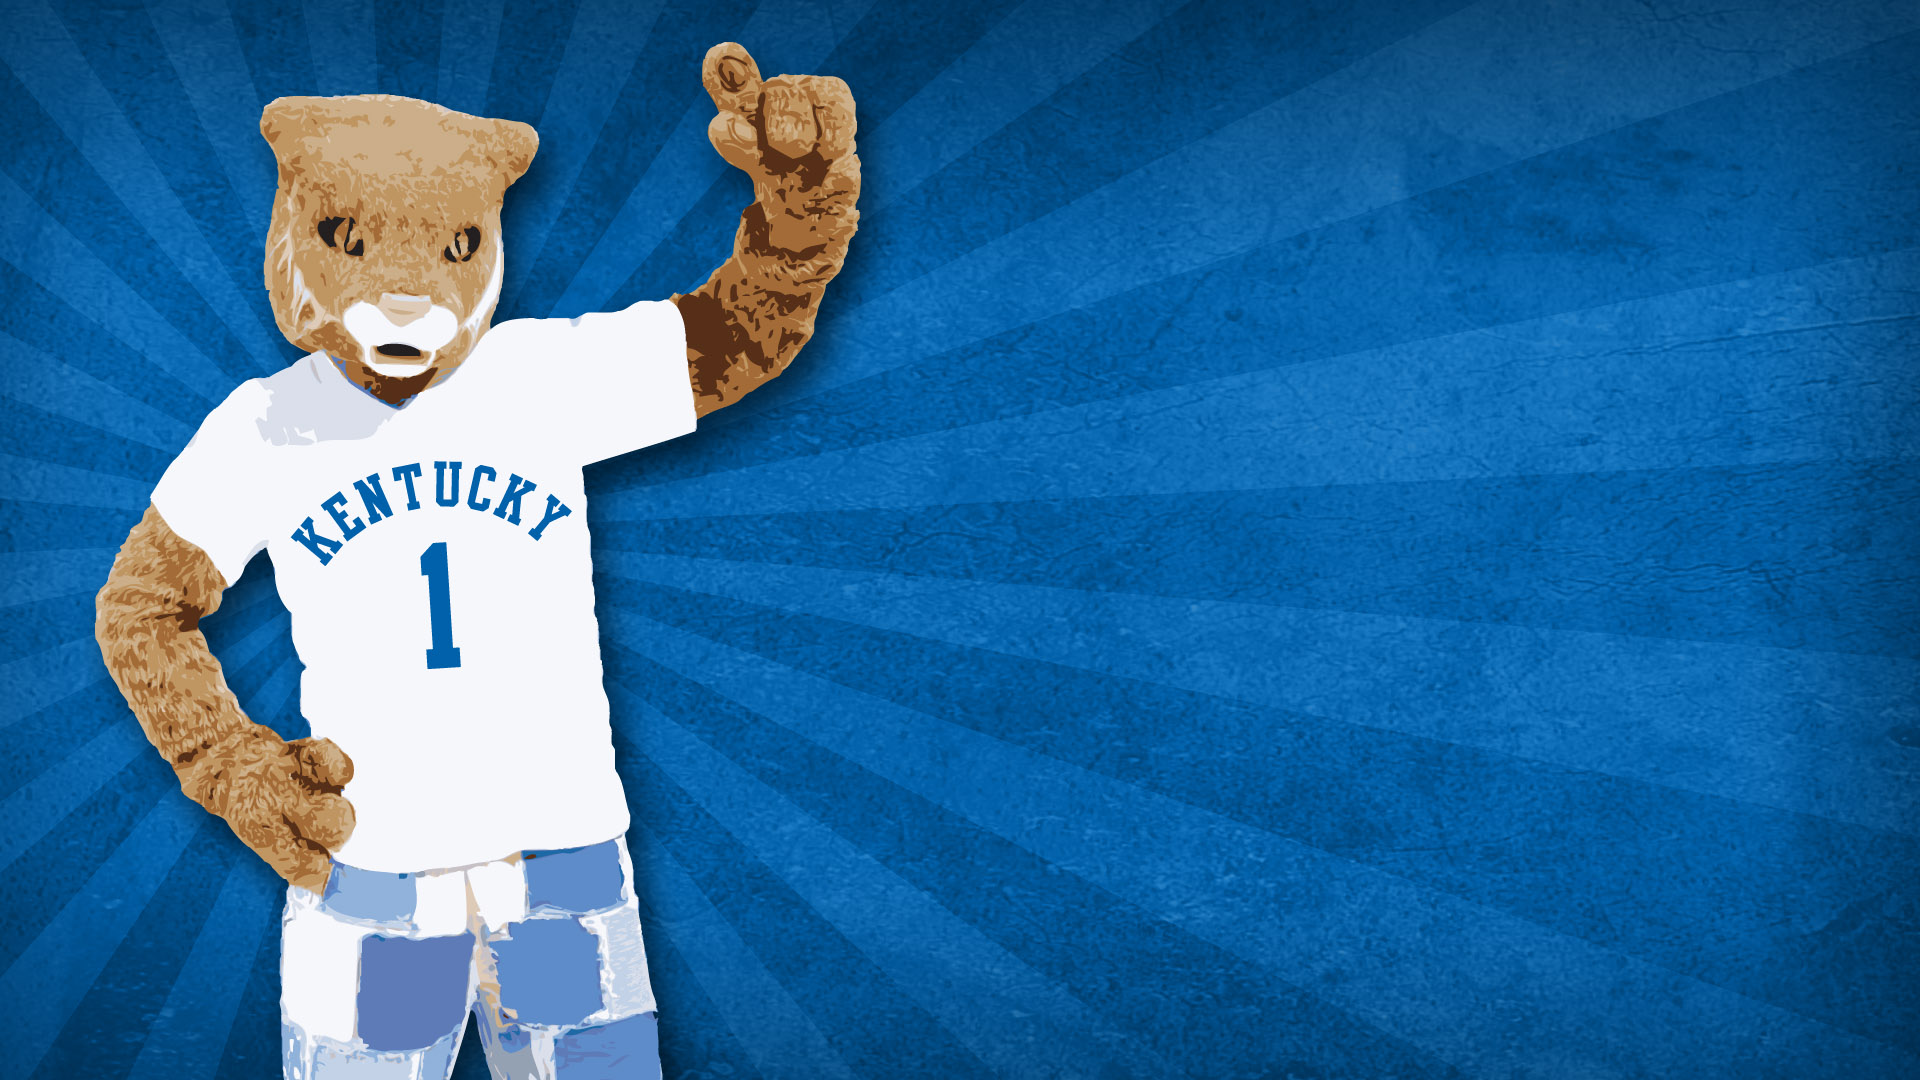  University of Kentucky desktop wallpaper featuring the Wildcats mascot